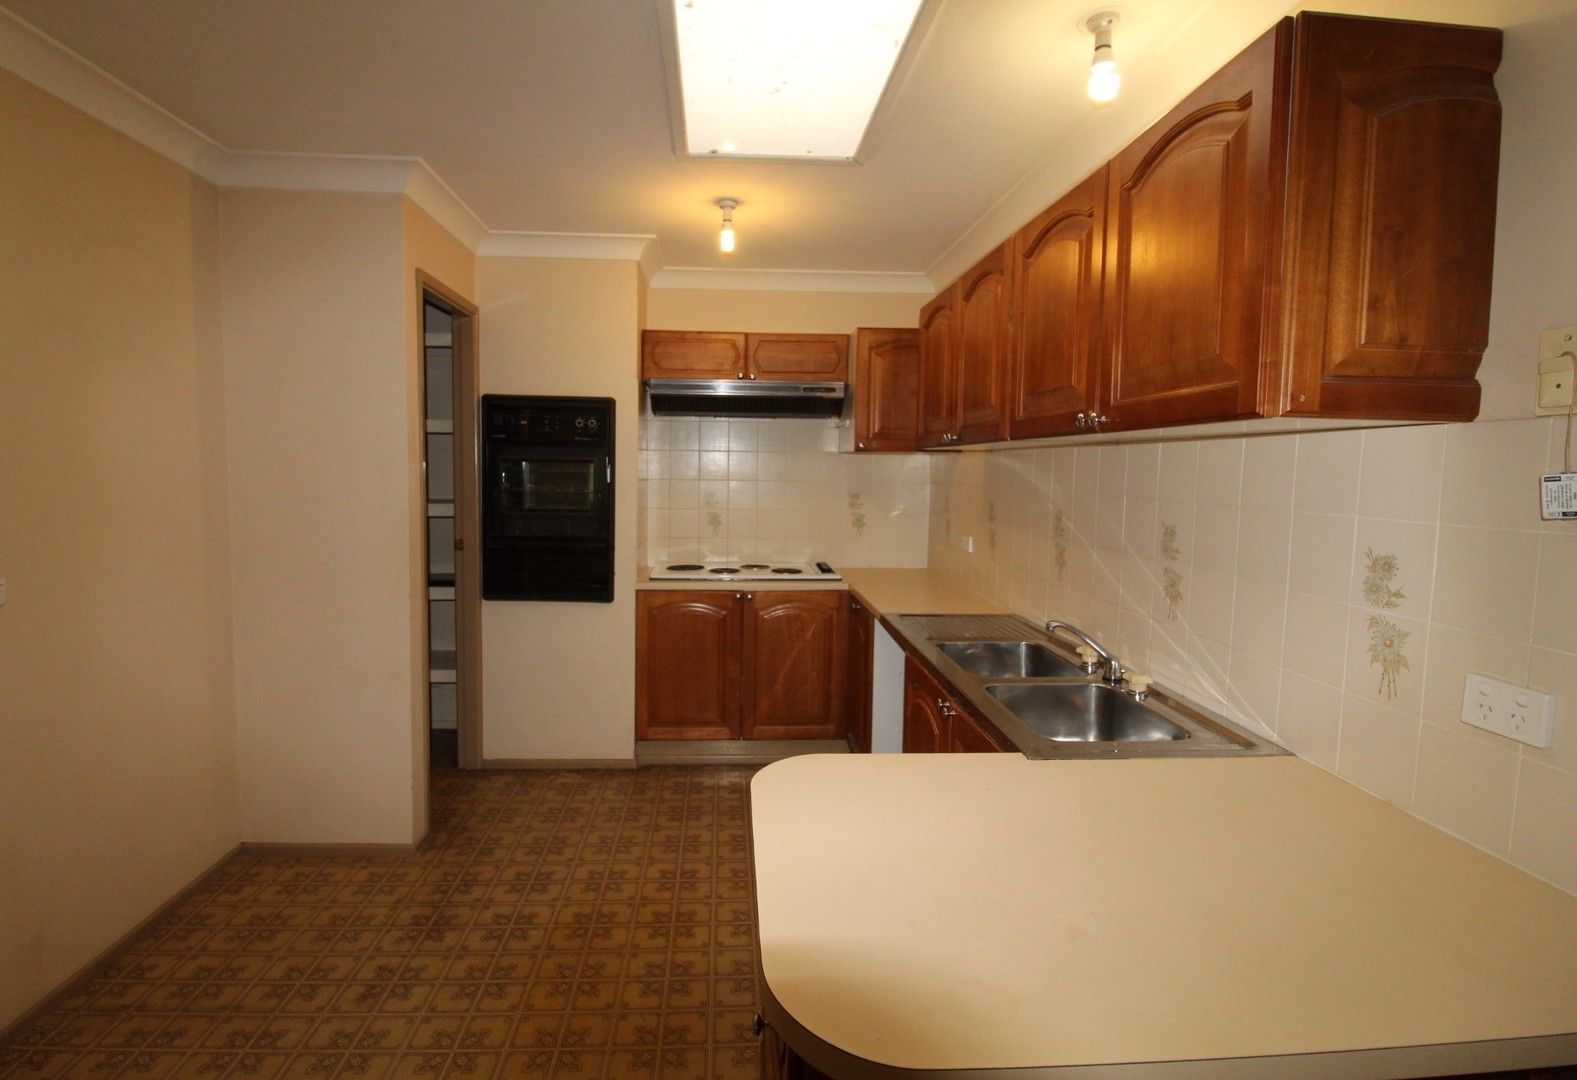 2 bedrooms Duplex in 3/25 Dawsons MENANGLE NSW, 2568